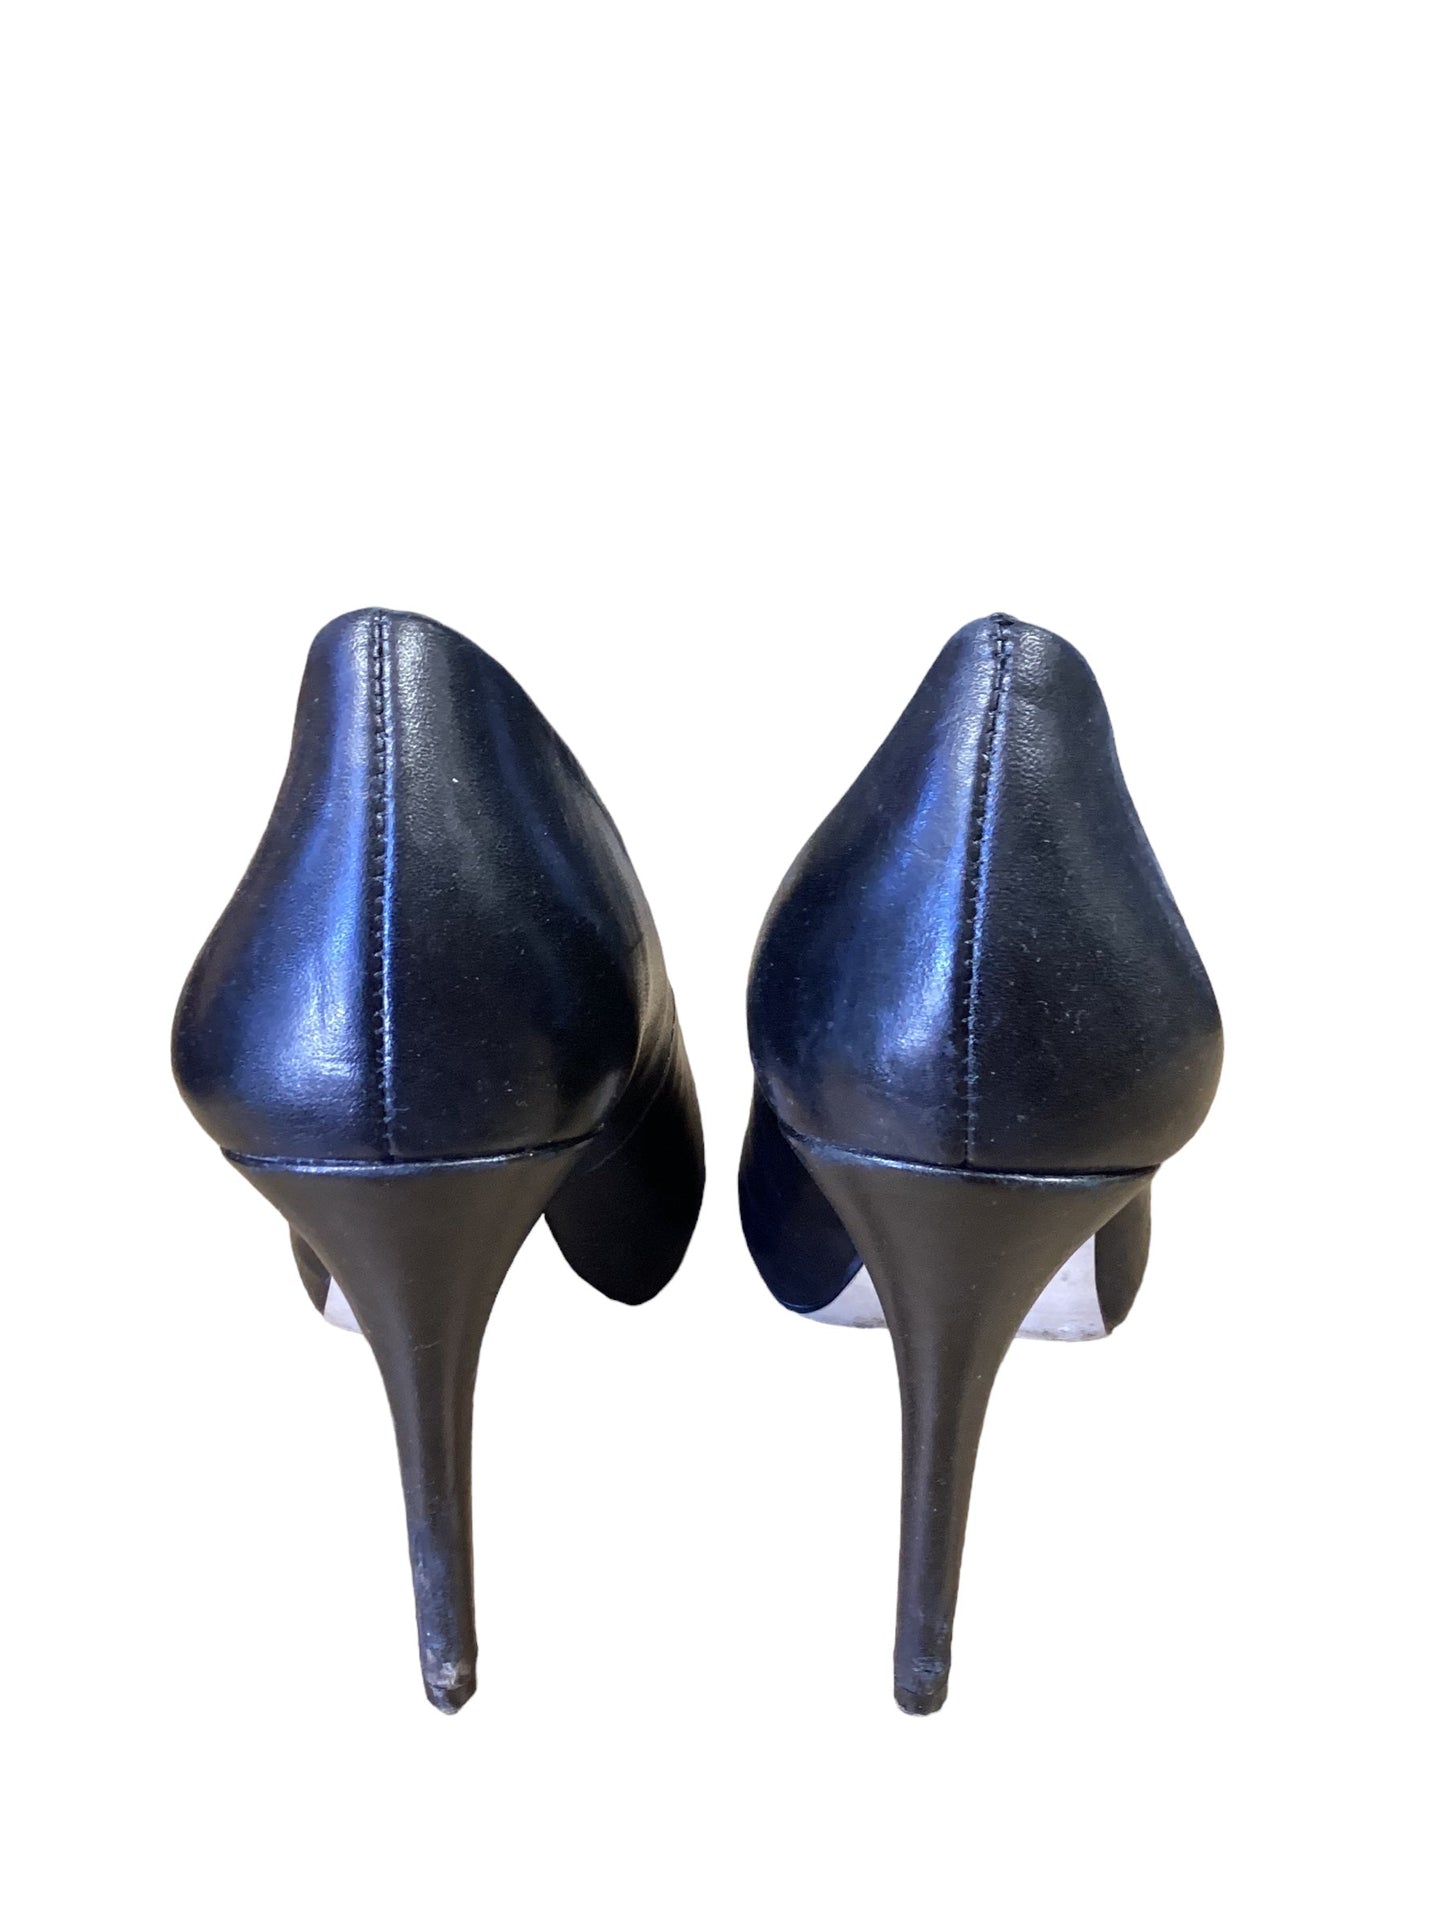 Black Shoes Heels Stiletto Michael By Michael Kors, Size 7